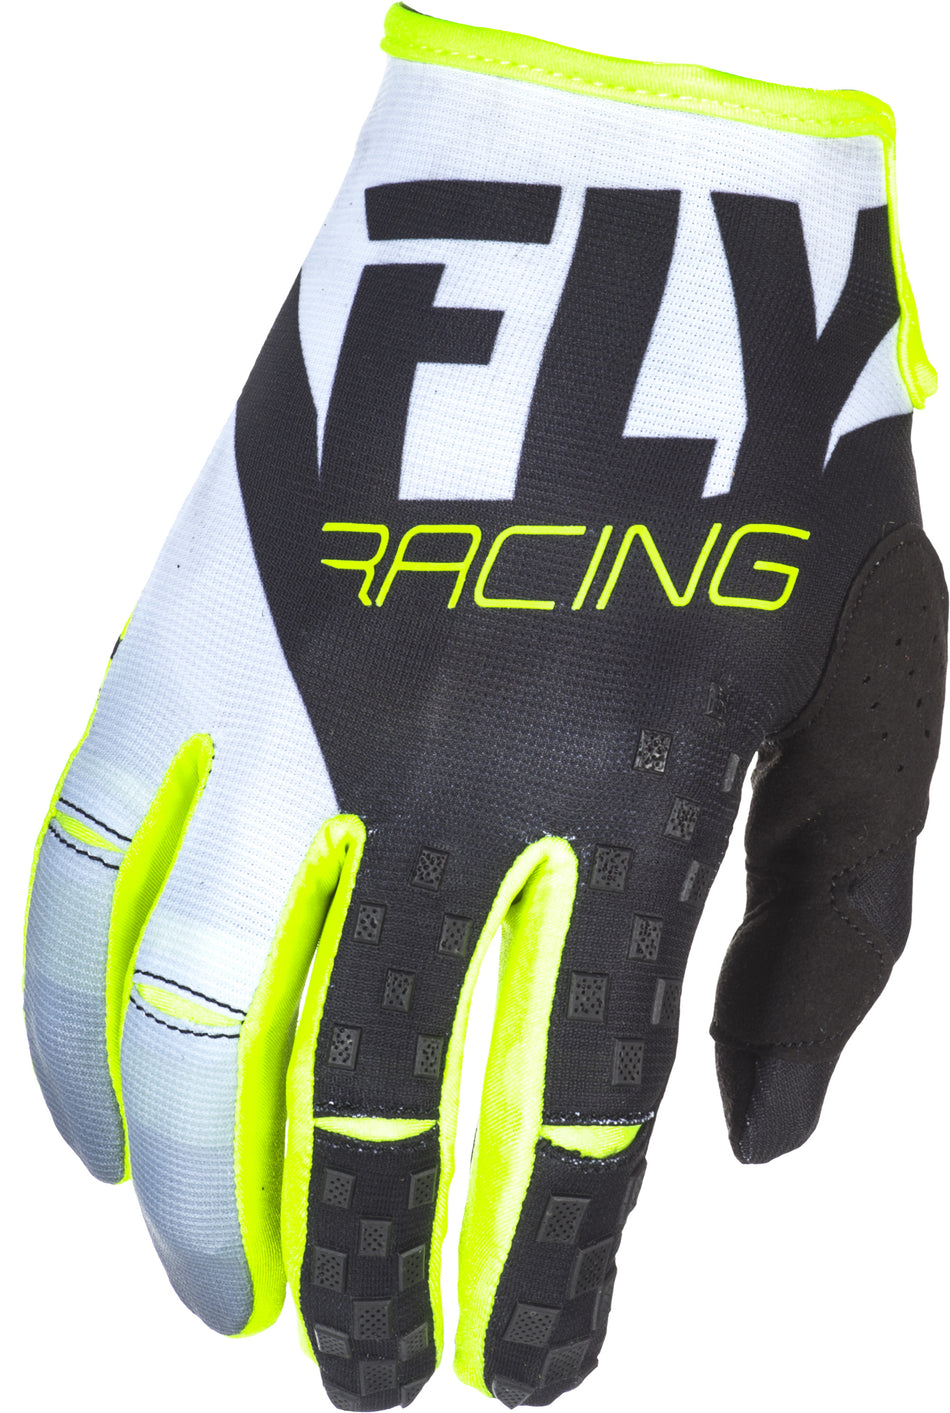 FLY RACING Kinetic Gloves Black/White/Hi-Vis Sz 9 371-41609